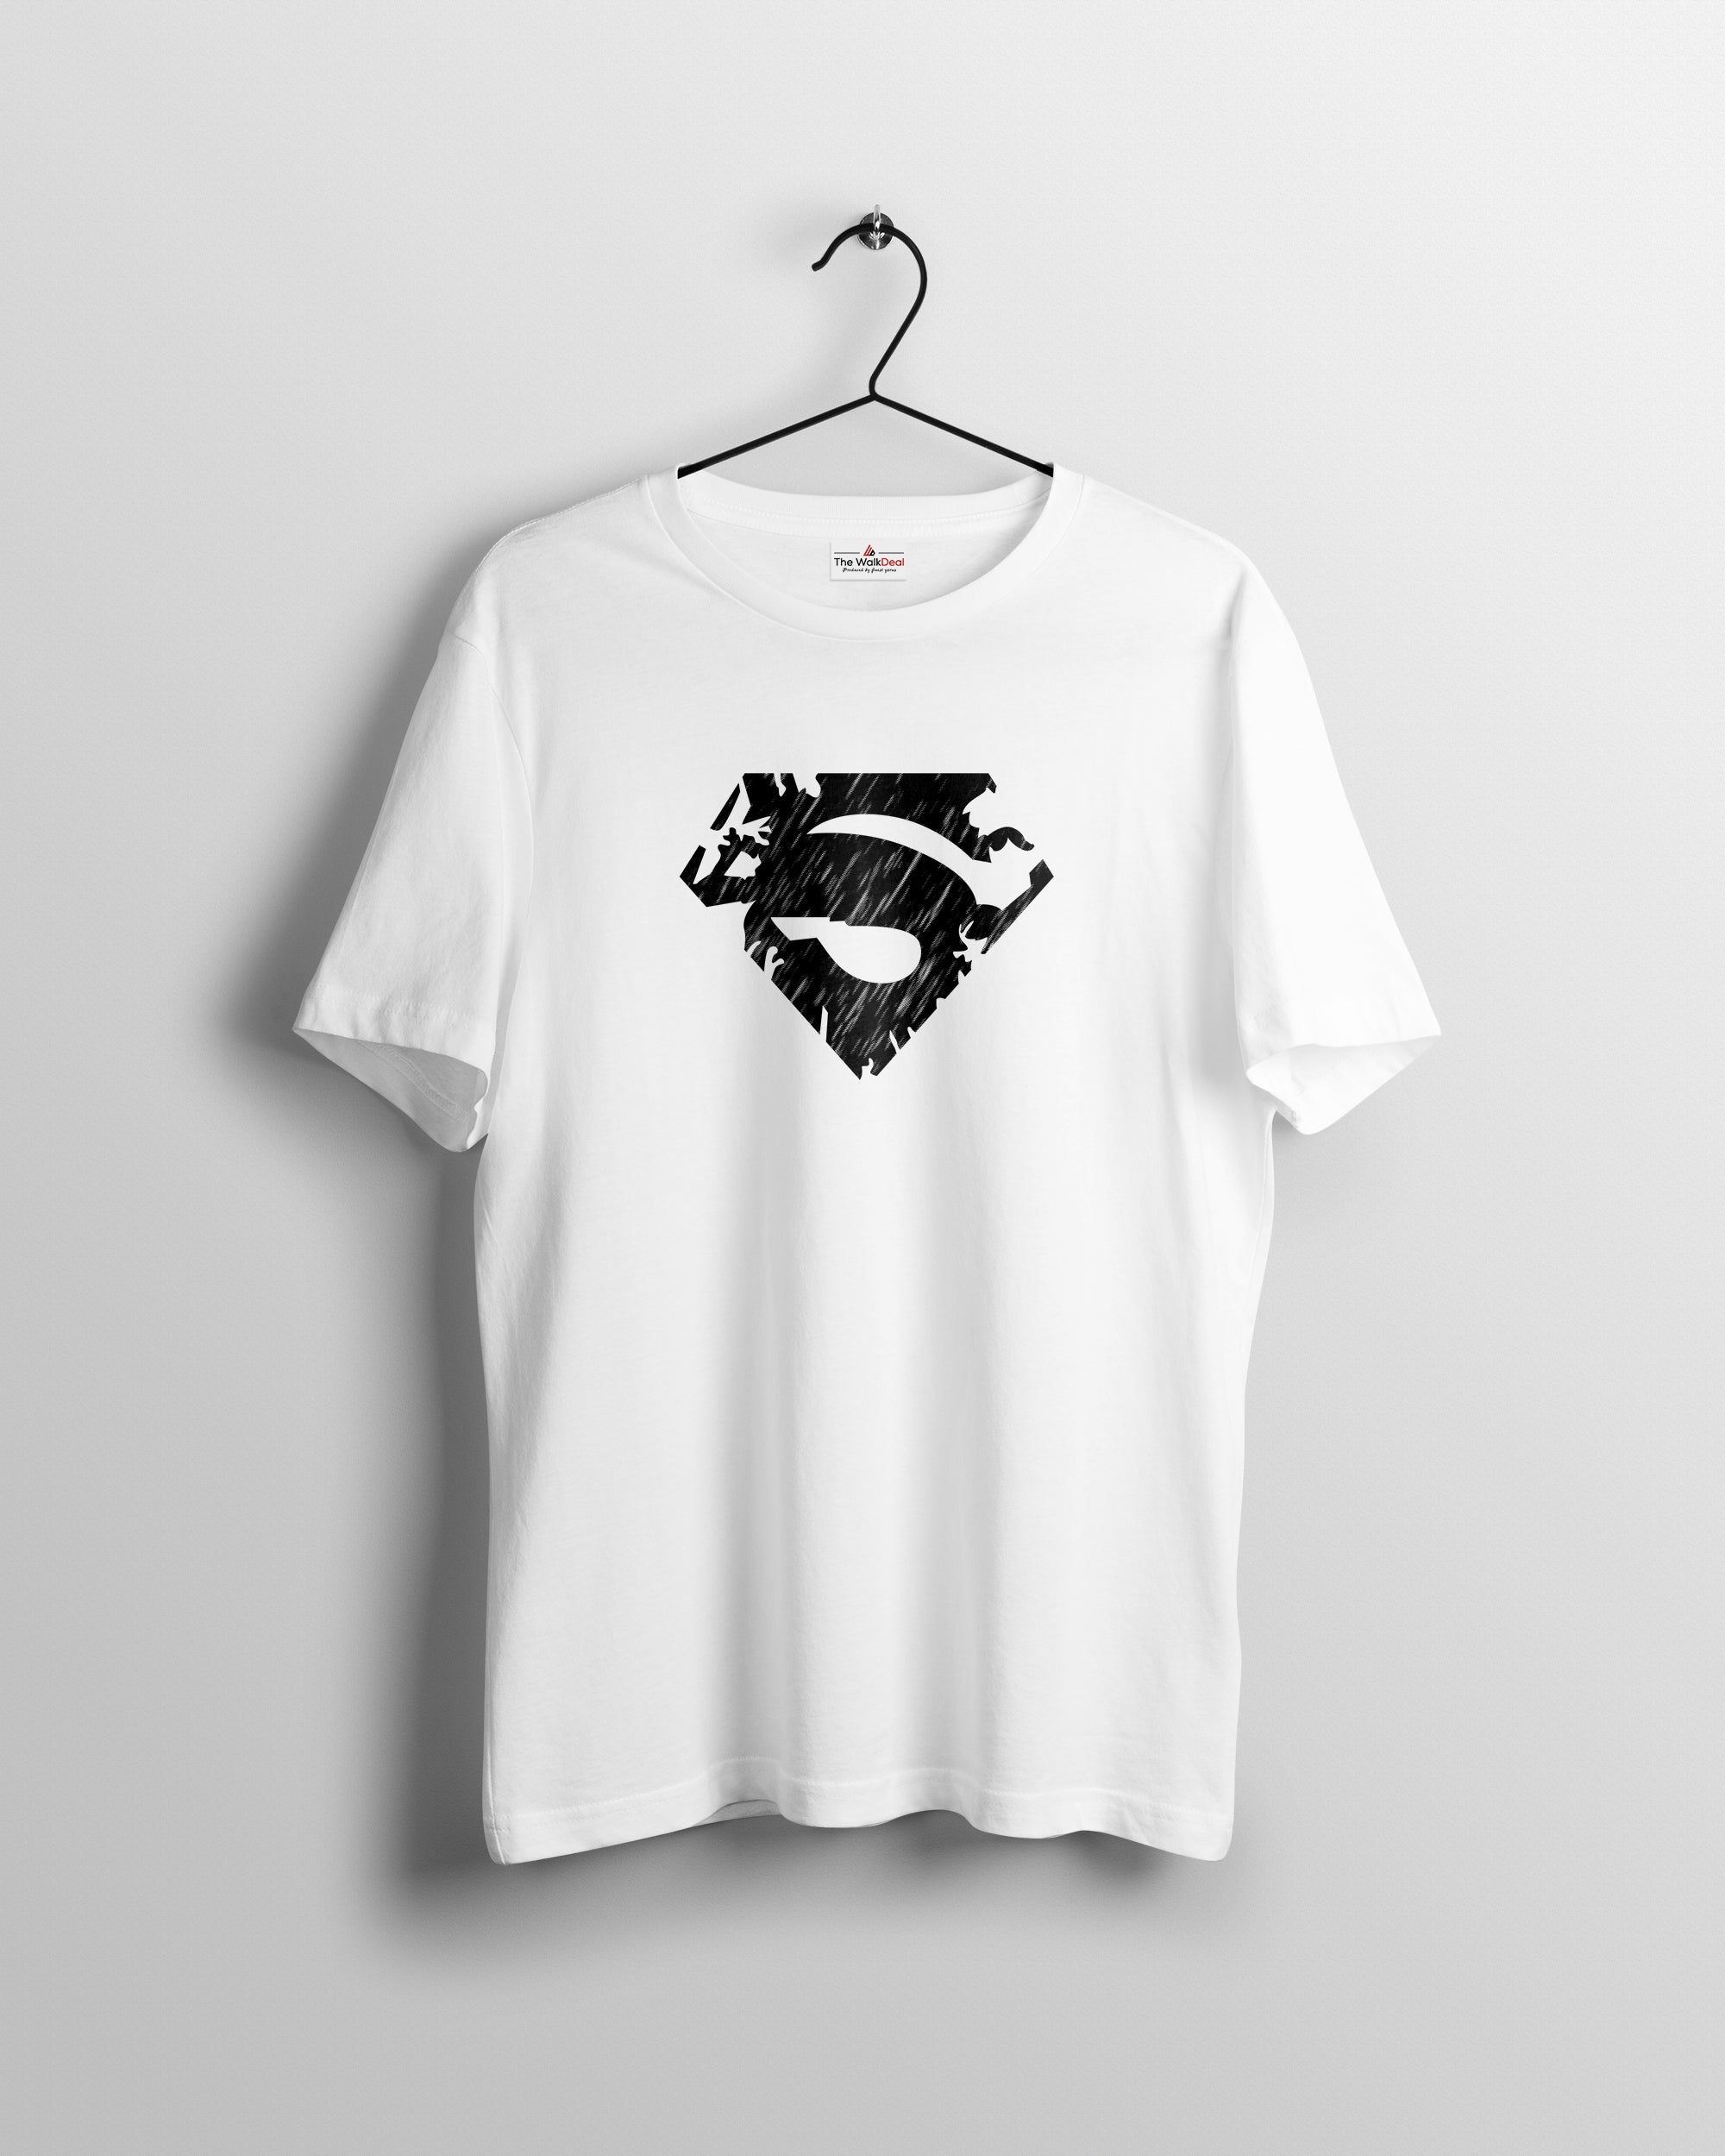 Superman T-Shirts For Men || White || Stylish Tshirts || 100% Cotton || Best T-Shirt For Men's